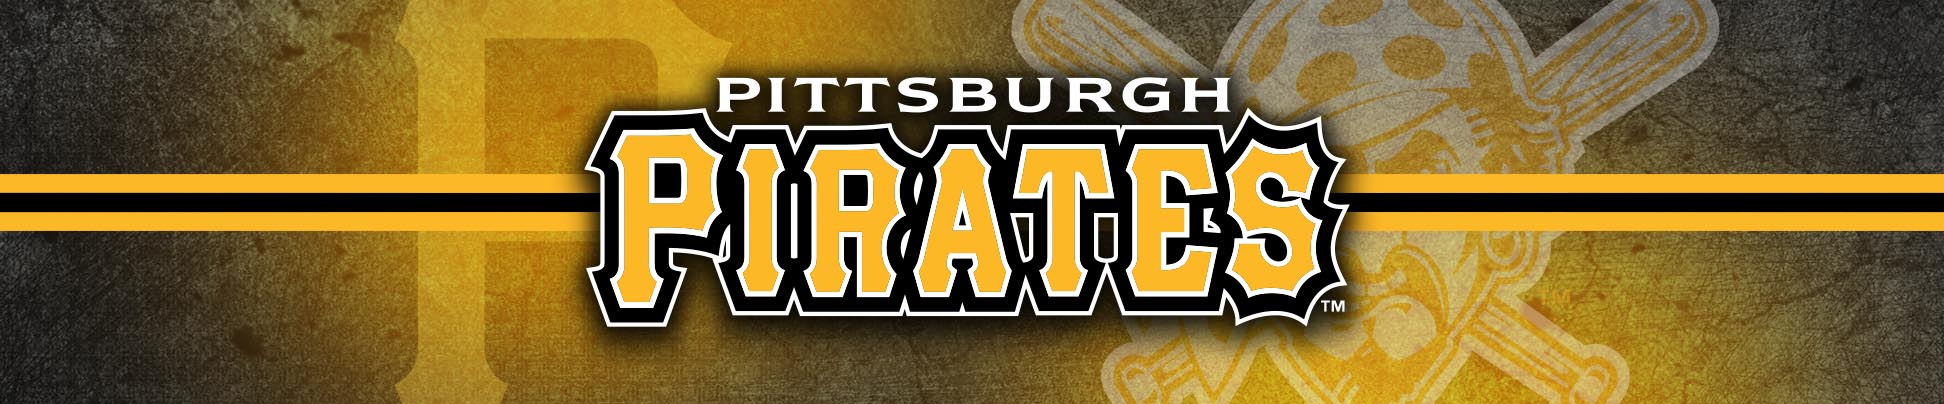 Pittsburgh Pirates Memorabilia & Collectibles